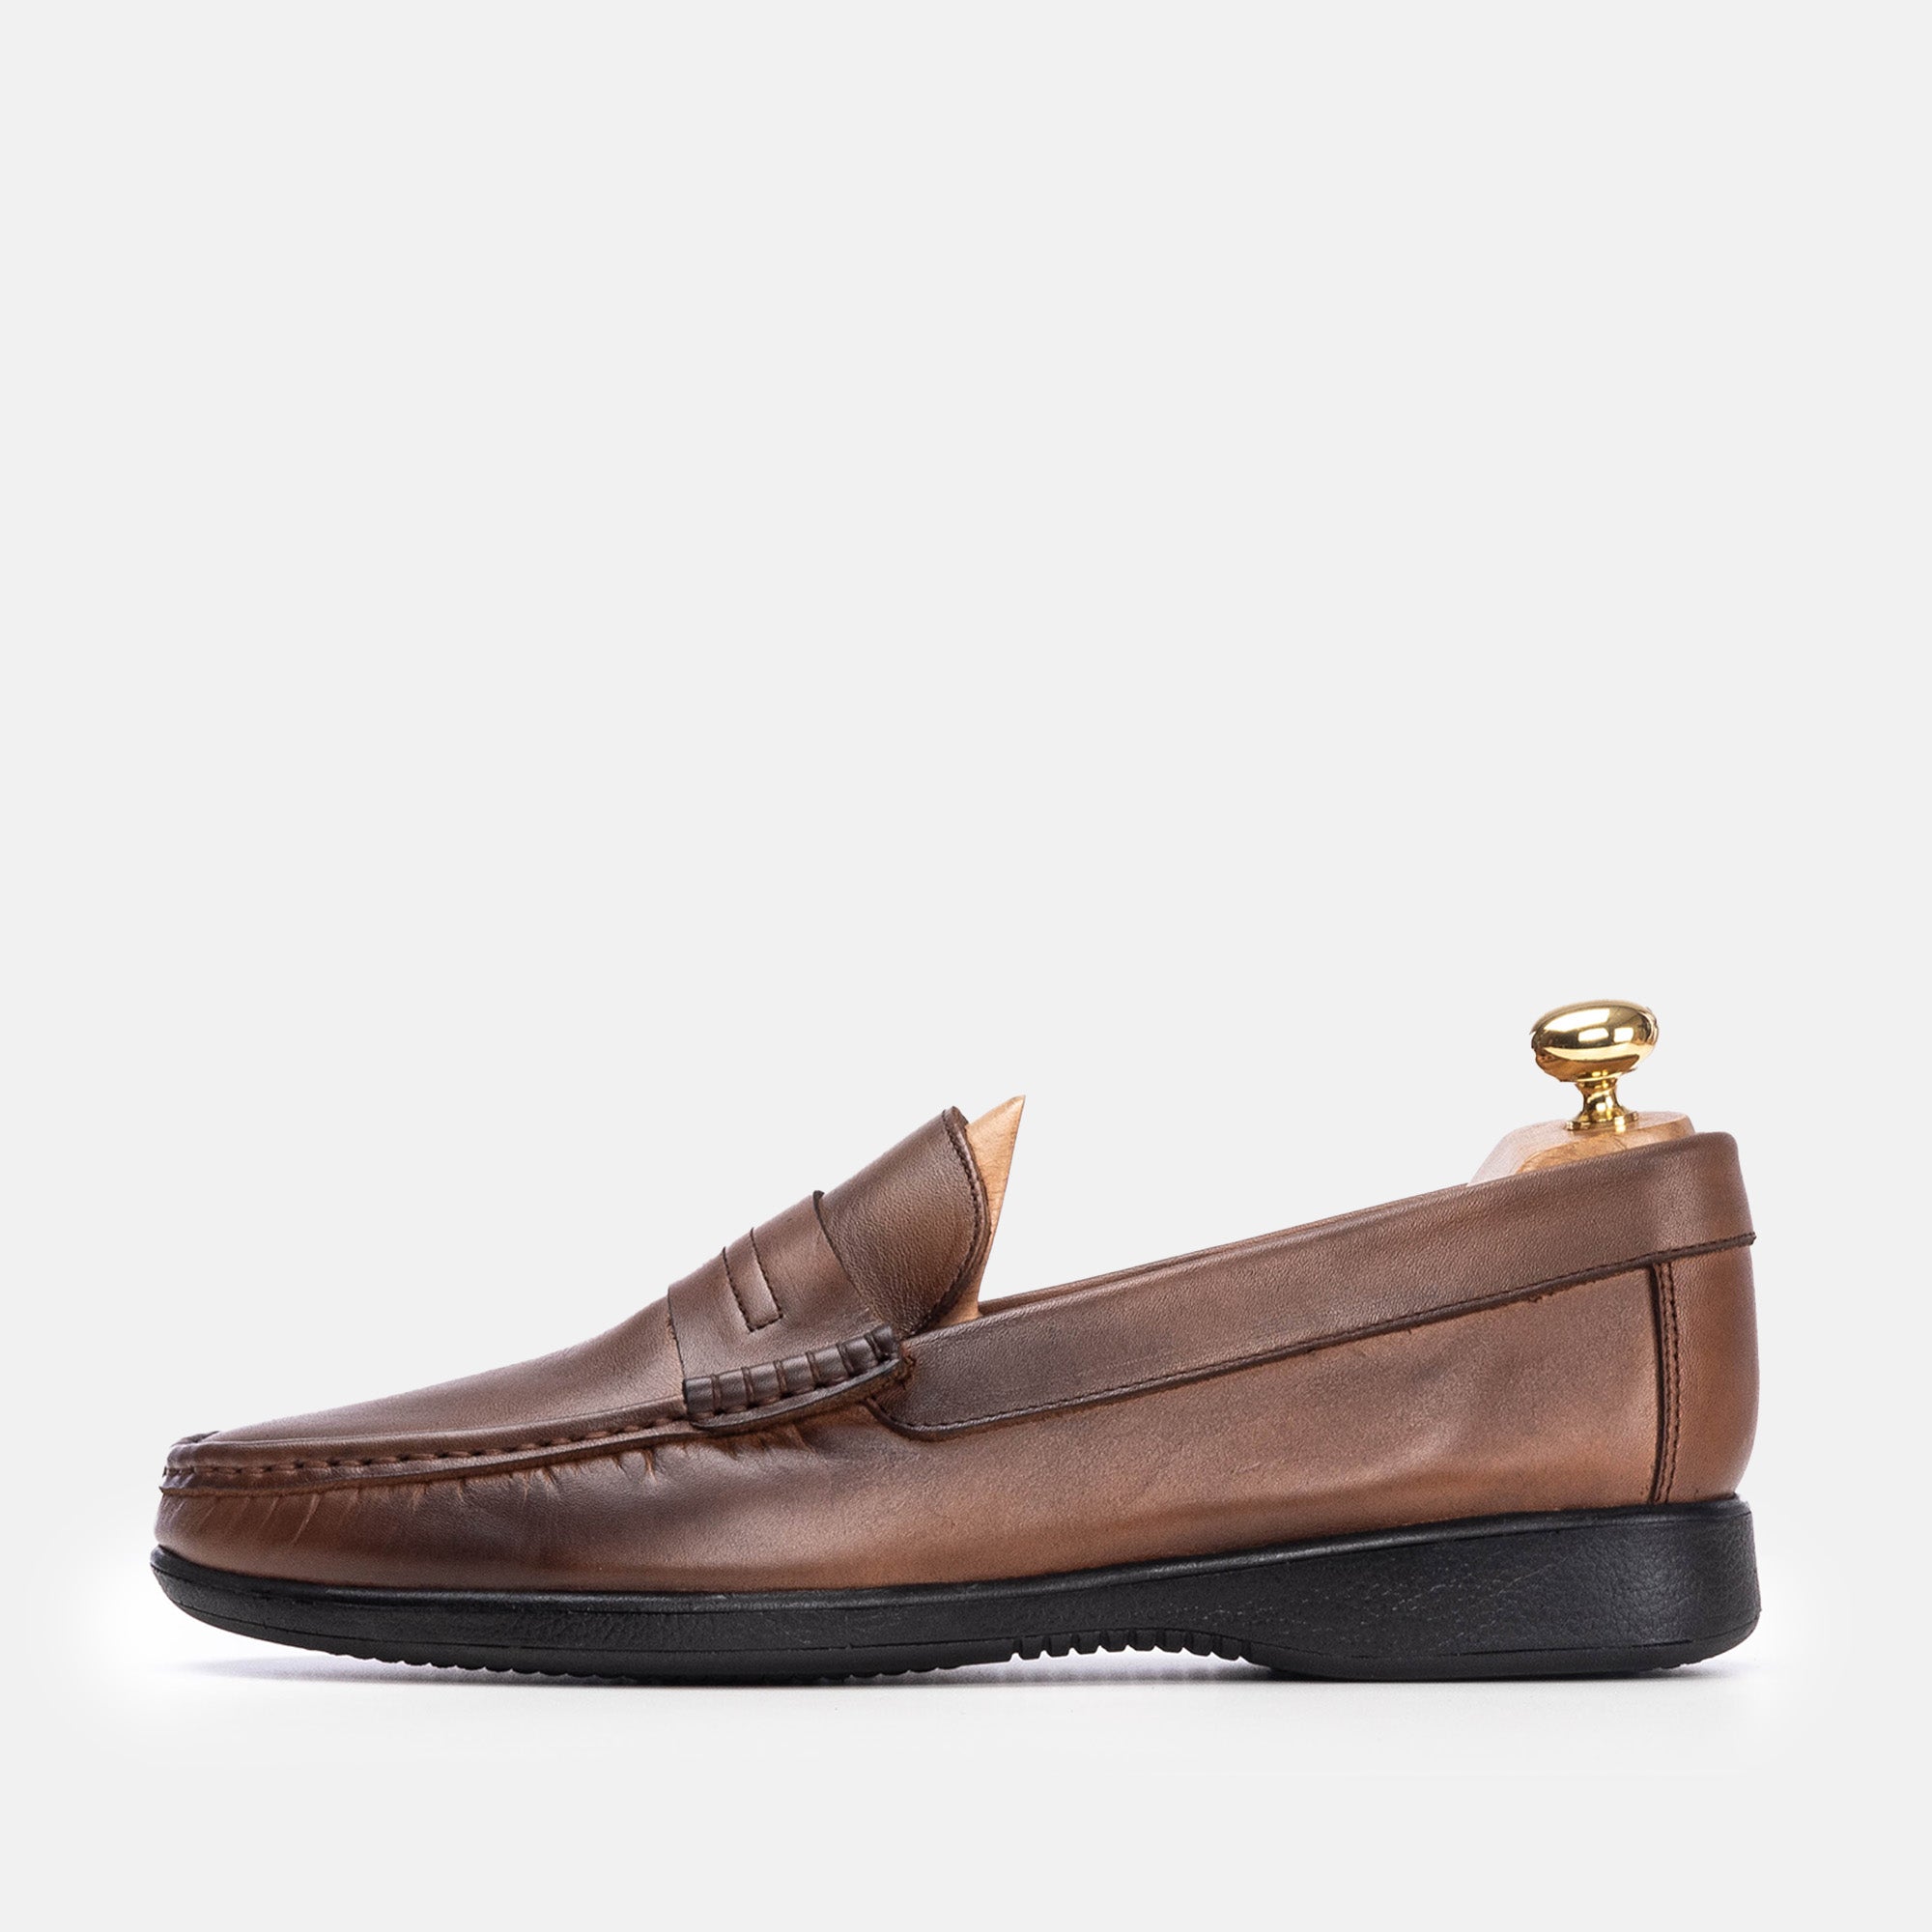 '''5212 Chaussure en cuir marron vintage